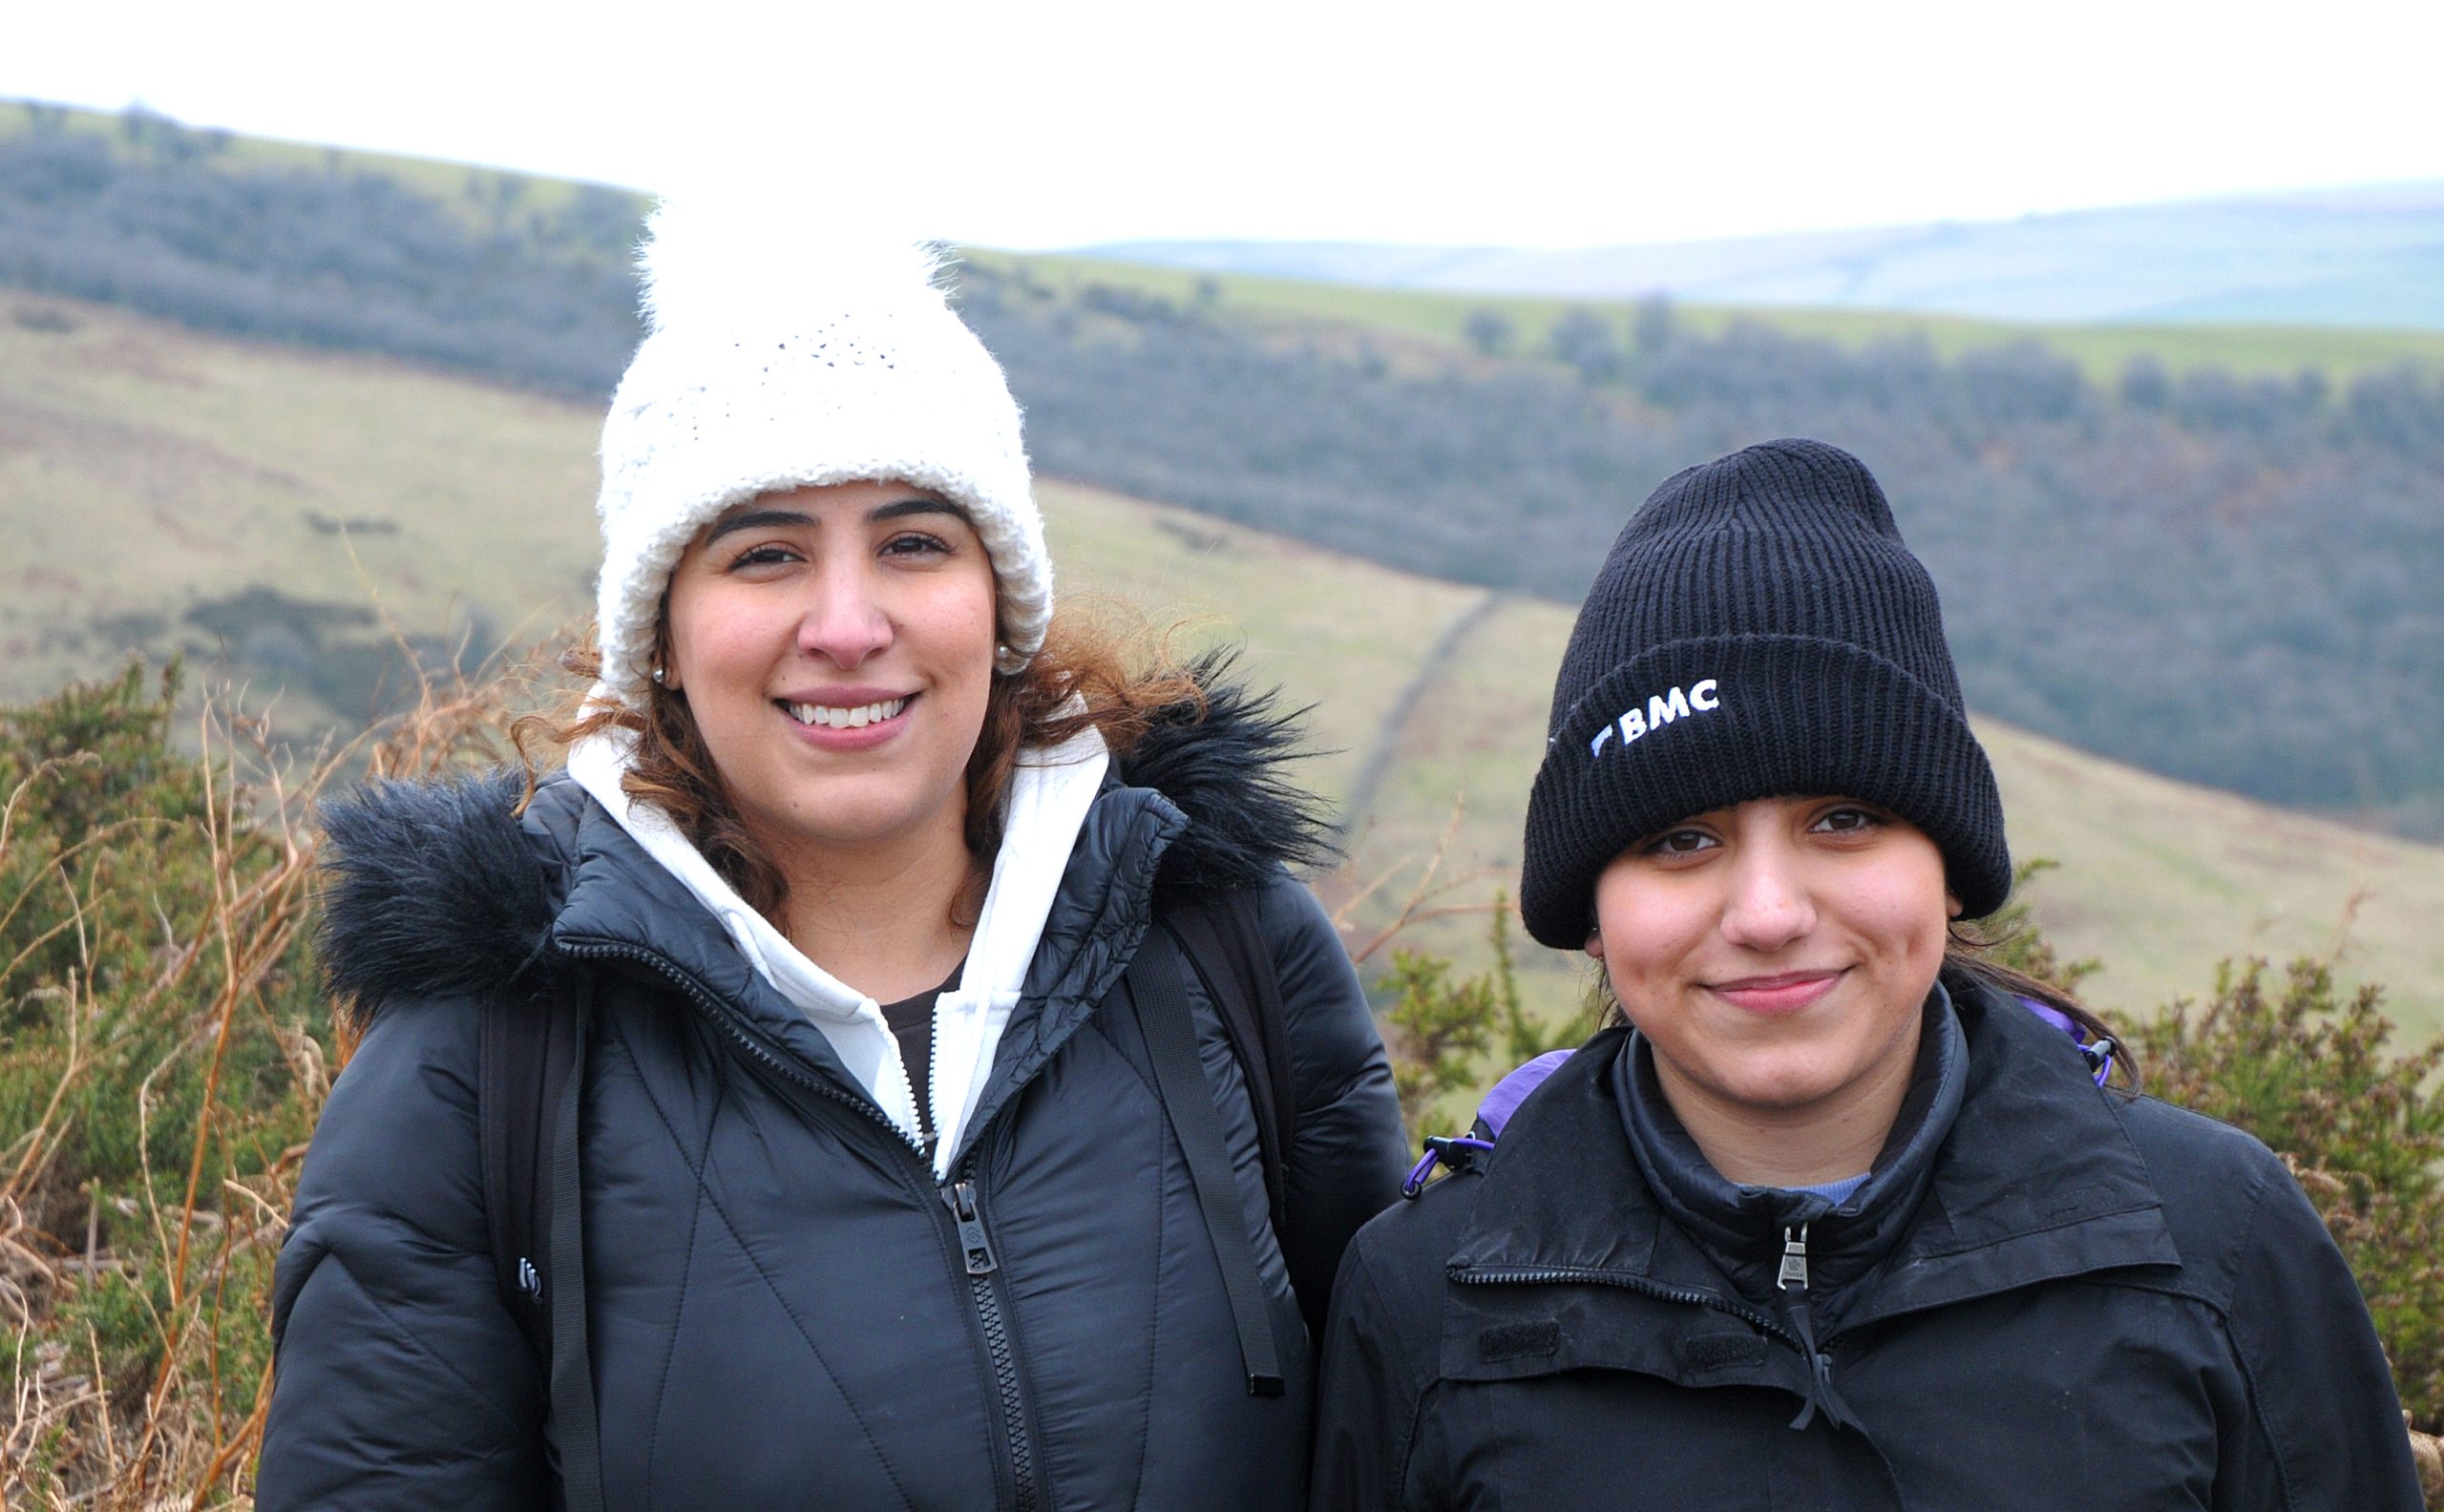 Mum and daughter Sadia and Khalisah walking together in the Peak District